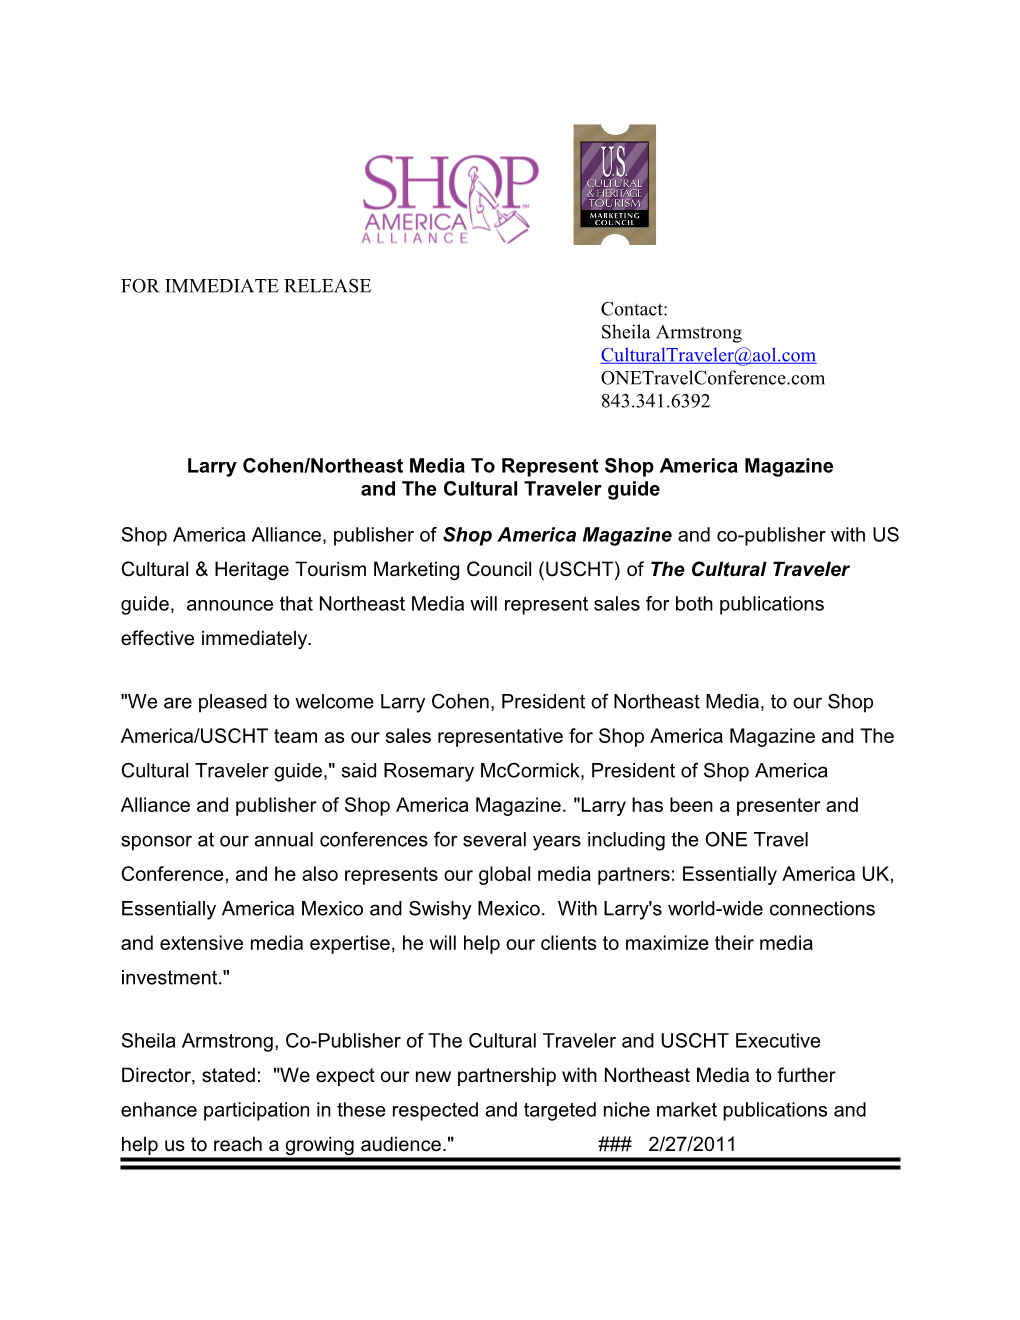 Larry Cohen/Northeast Media to Represent Shop America Magazine